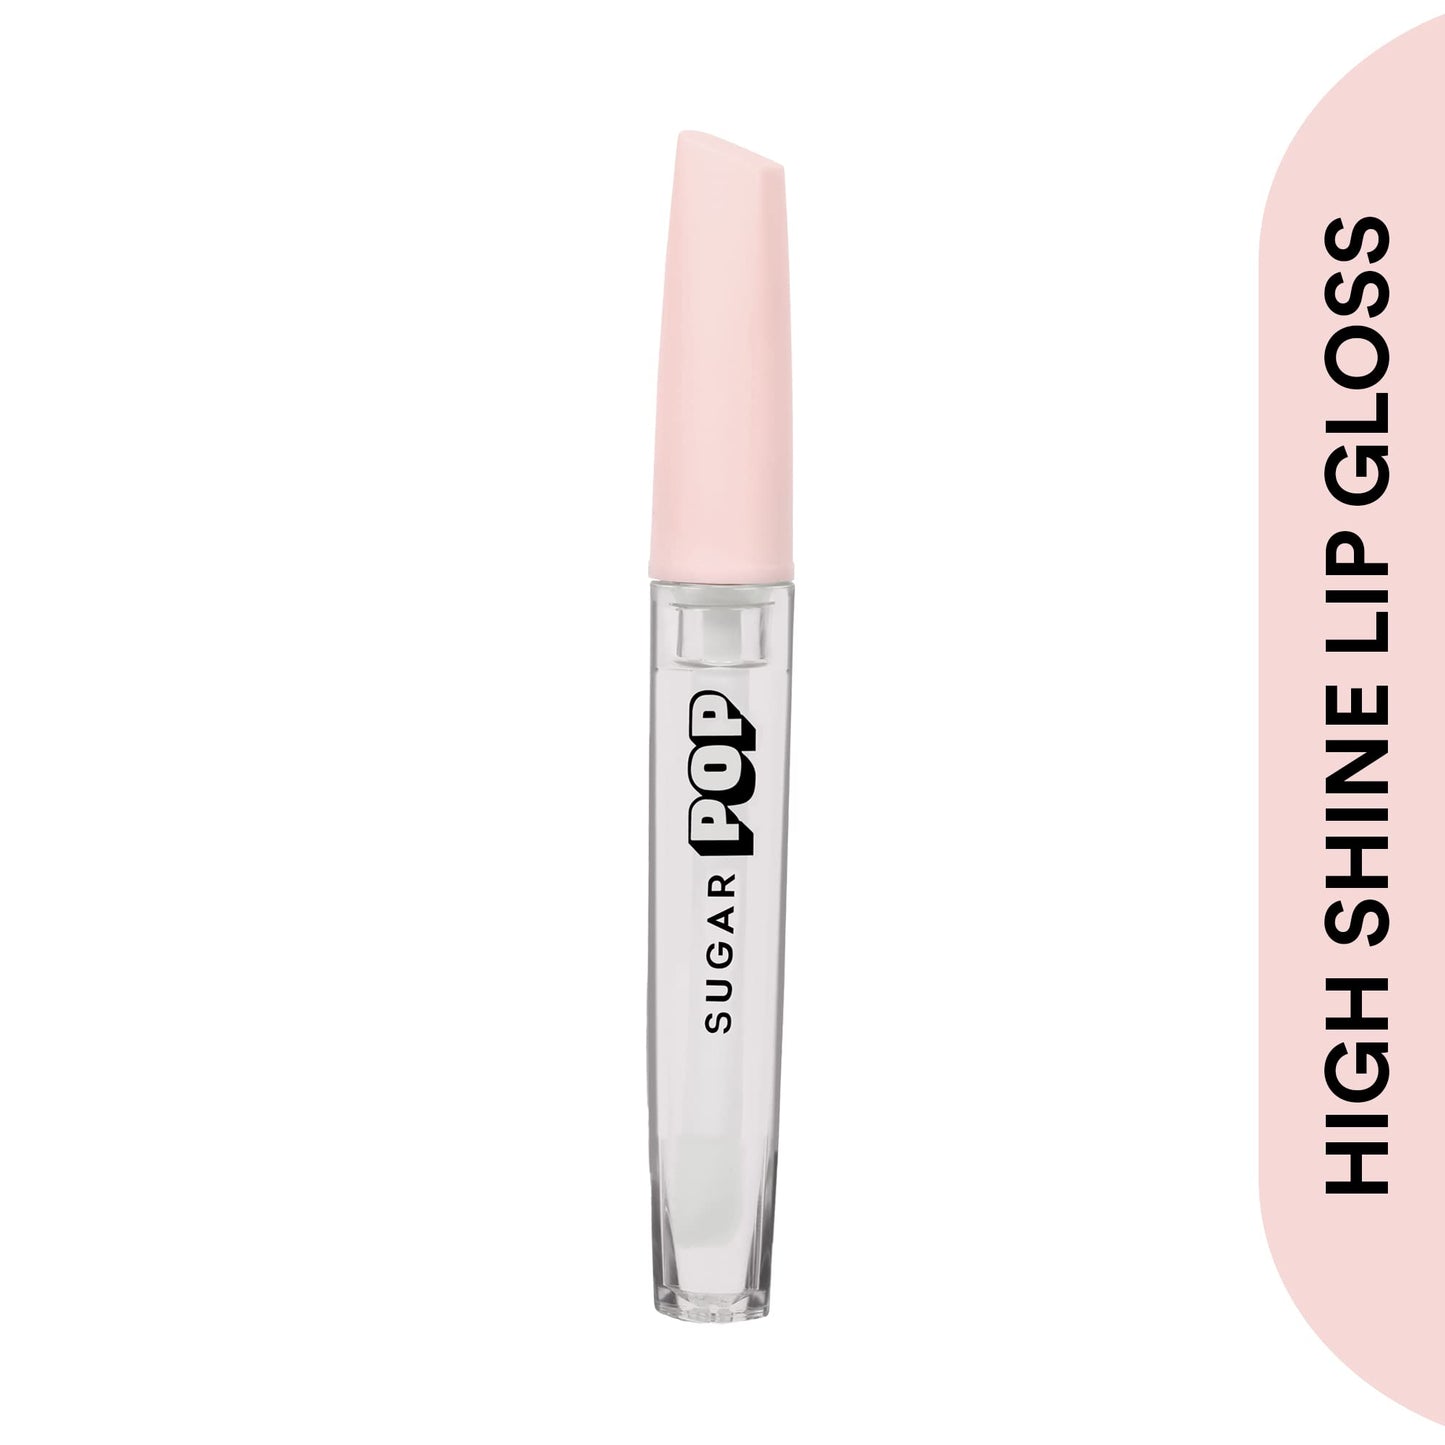 SUGAR POP High Shine Lip Gloss - 01 Marshmallow (Clear) Lip Plumping Gloss For Soft & Dewy Lips & Sugar Pop Matte Finish Eyeliner Combo